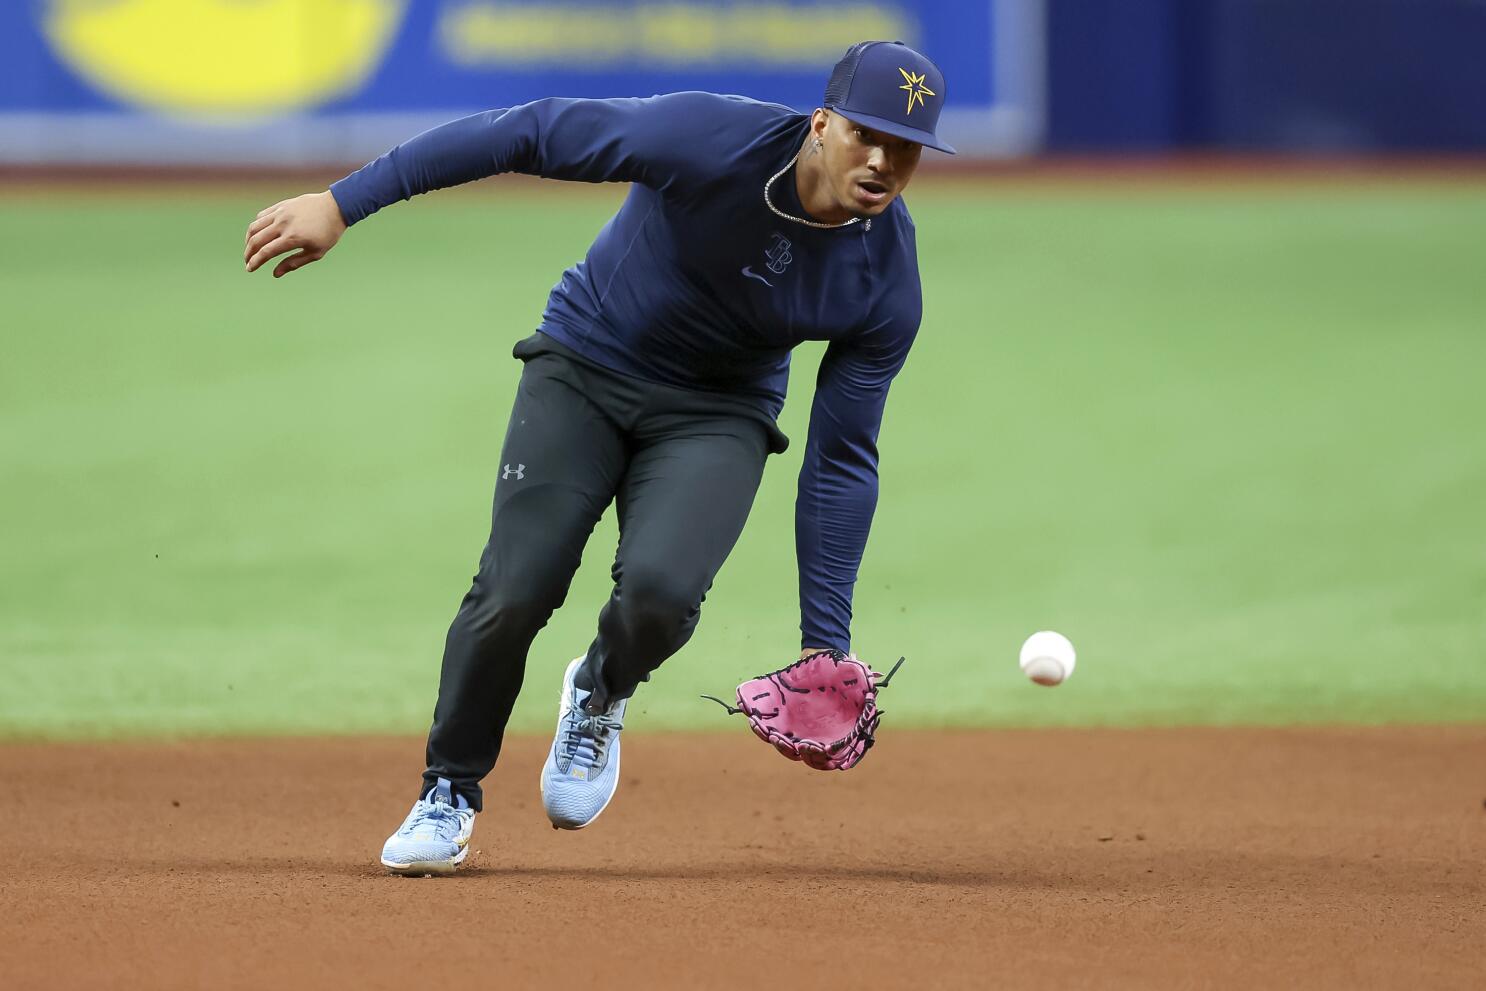 MLB looking into social media posts involving Rays shortstop Wander Franco  - The San Diego Union-Tribune